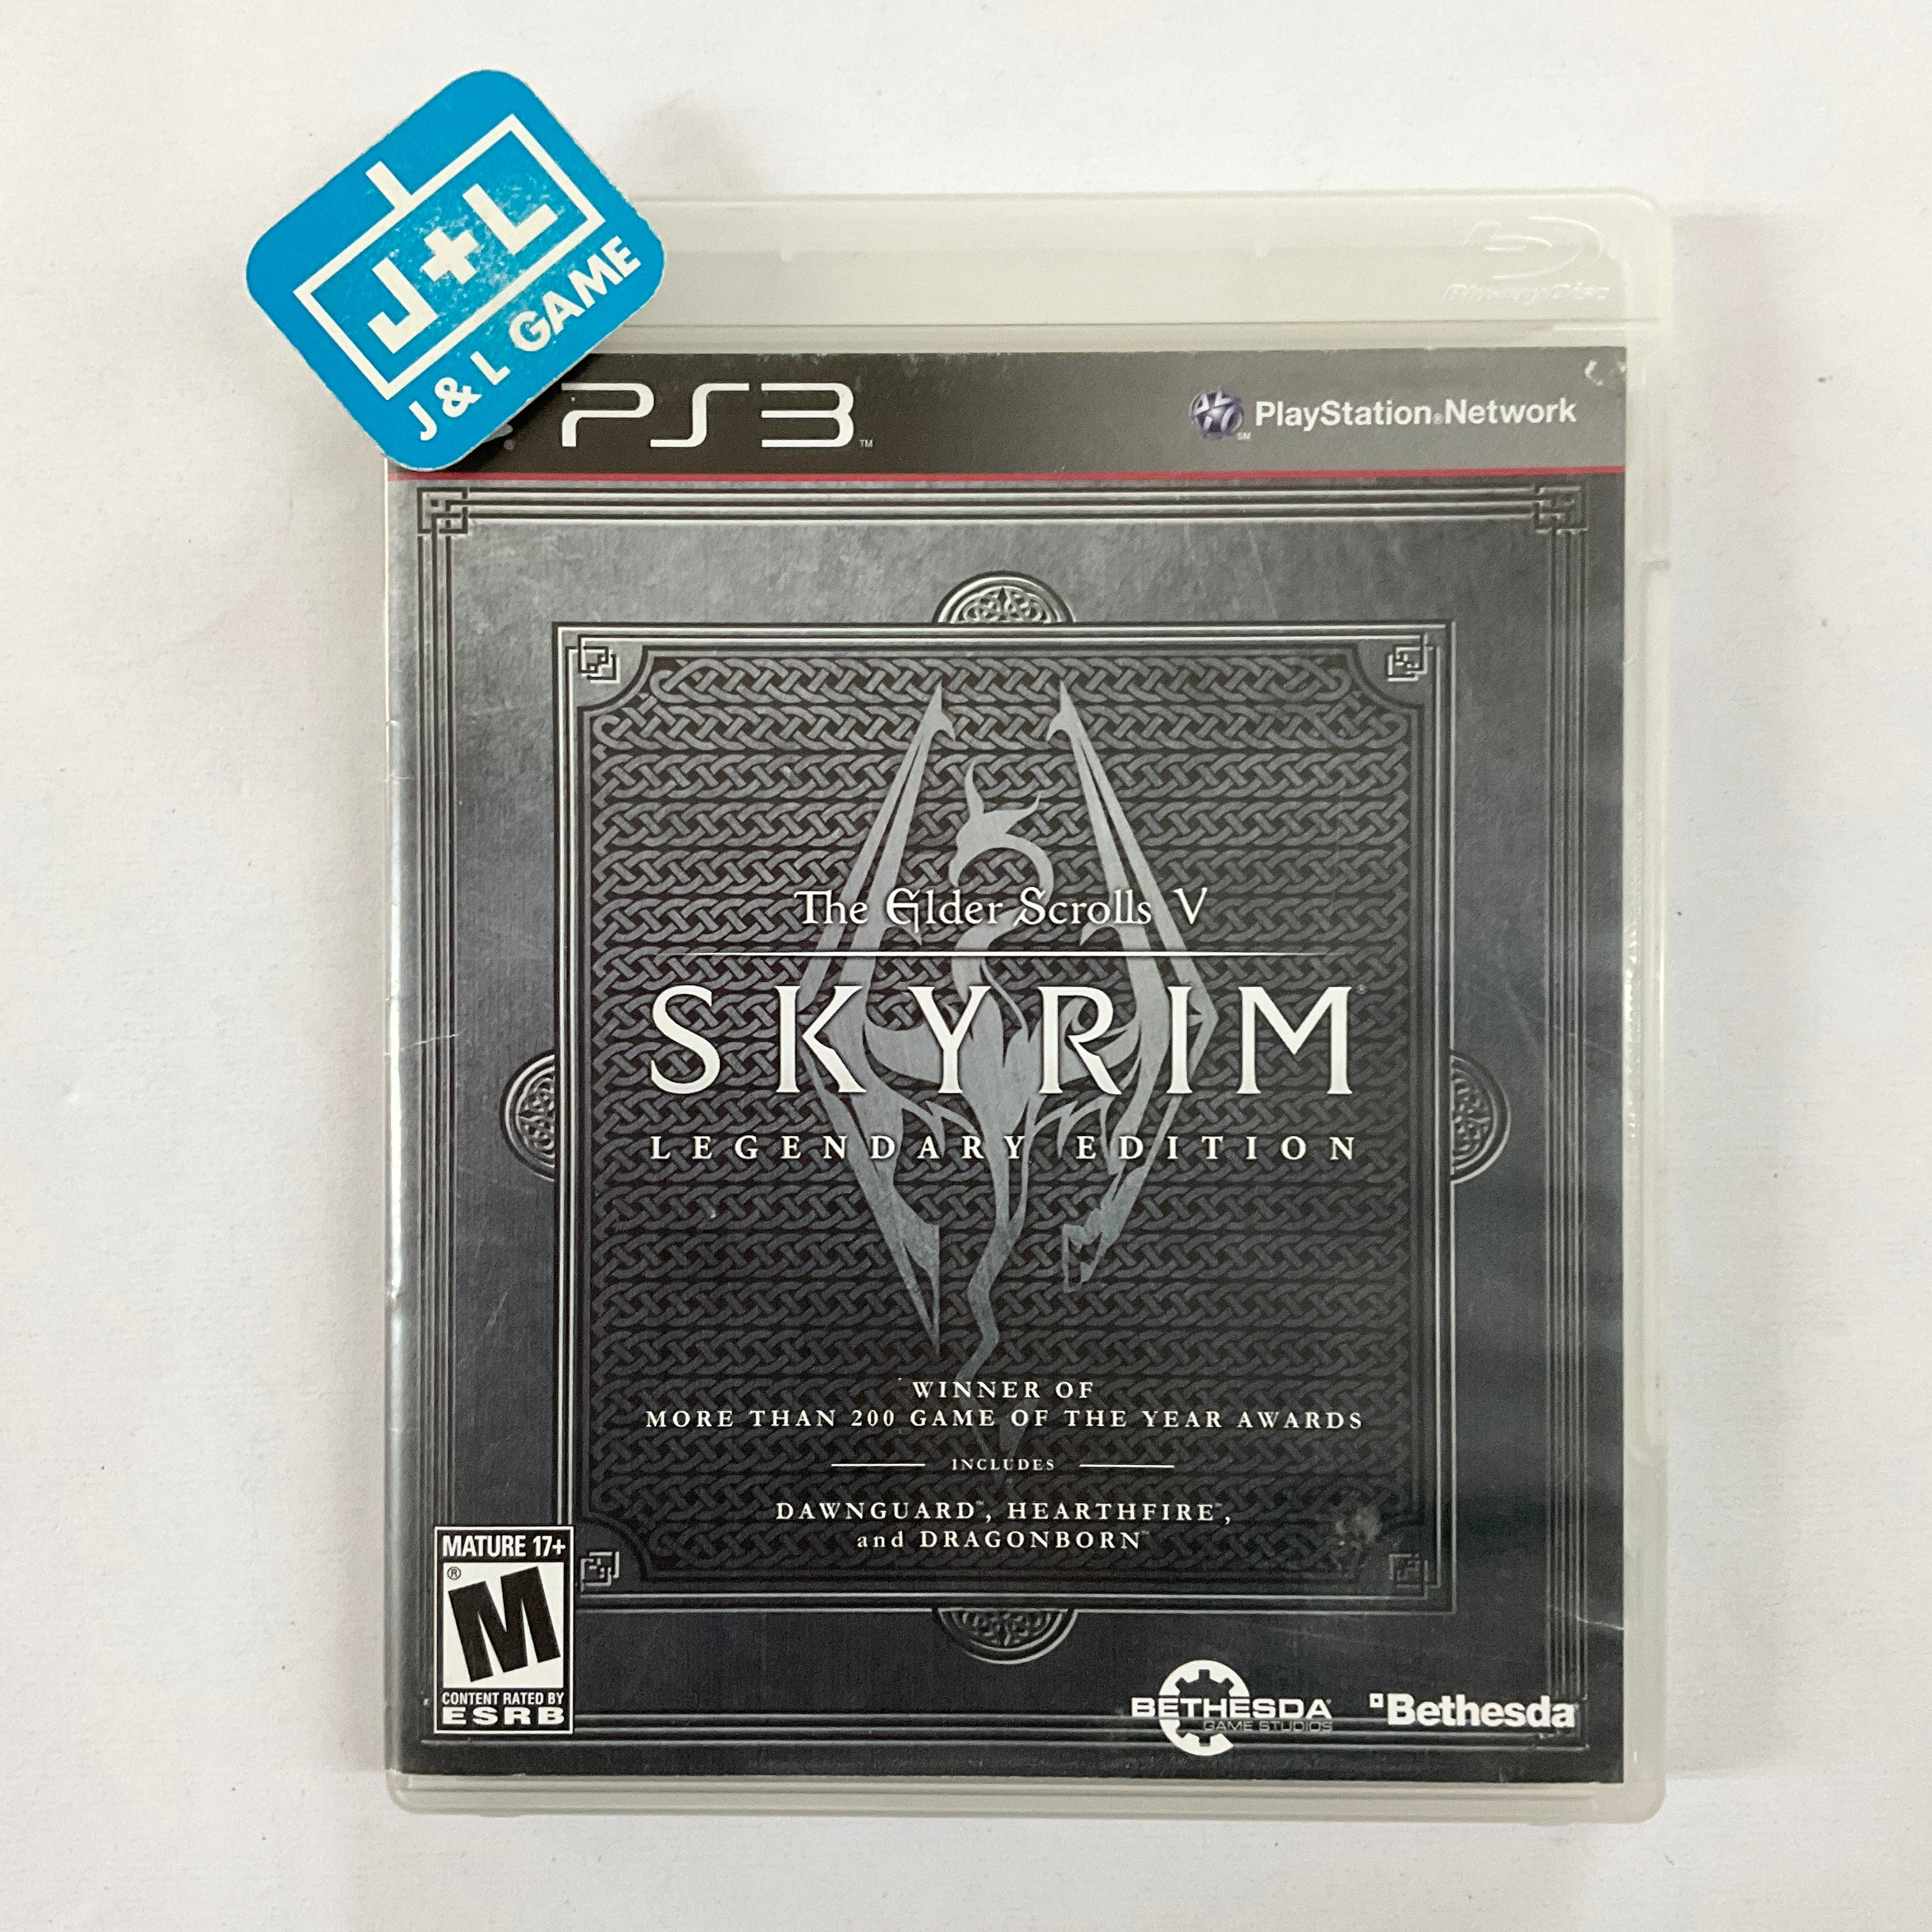 The Elder Scrolls V: Skyrim (Legendary Edition) - (PS3) Playstation 3 [Pre-Owned]